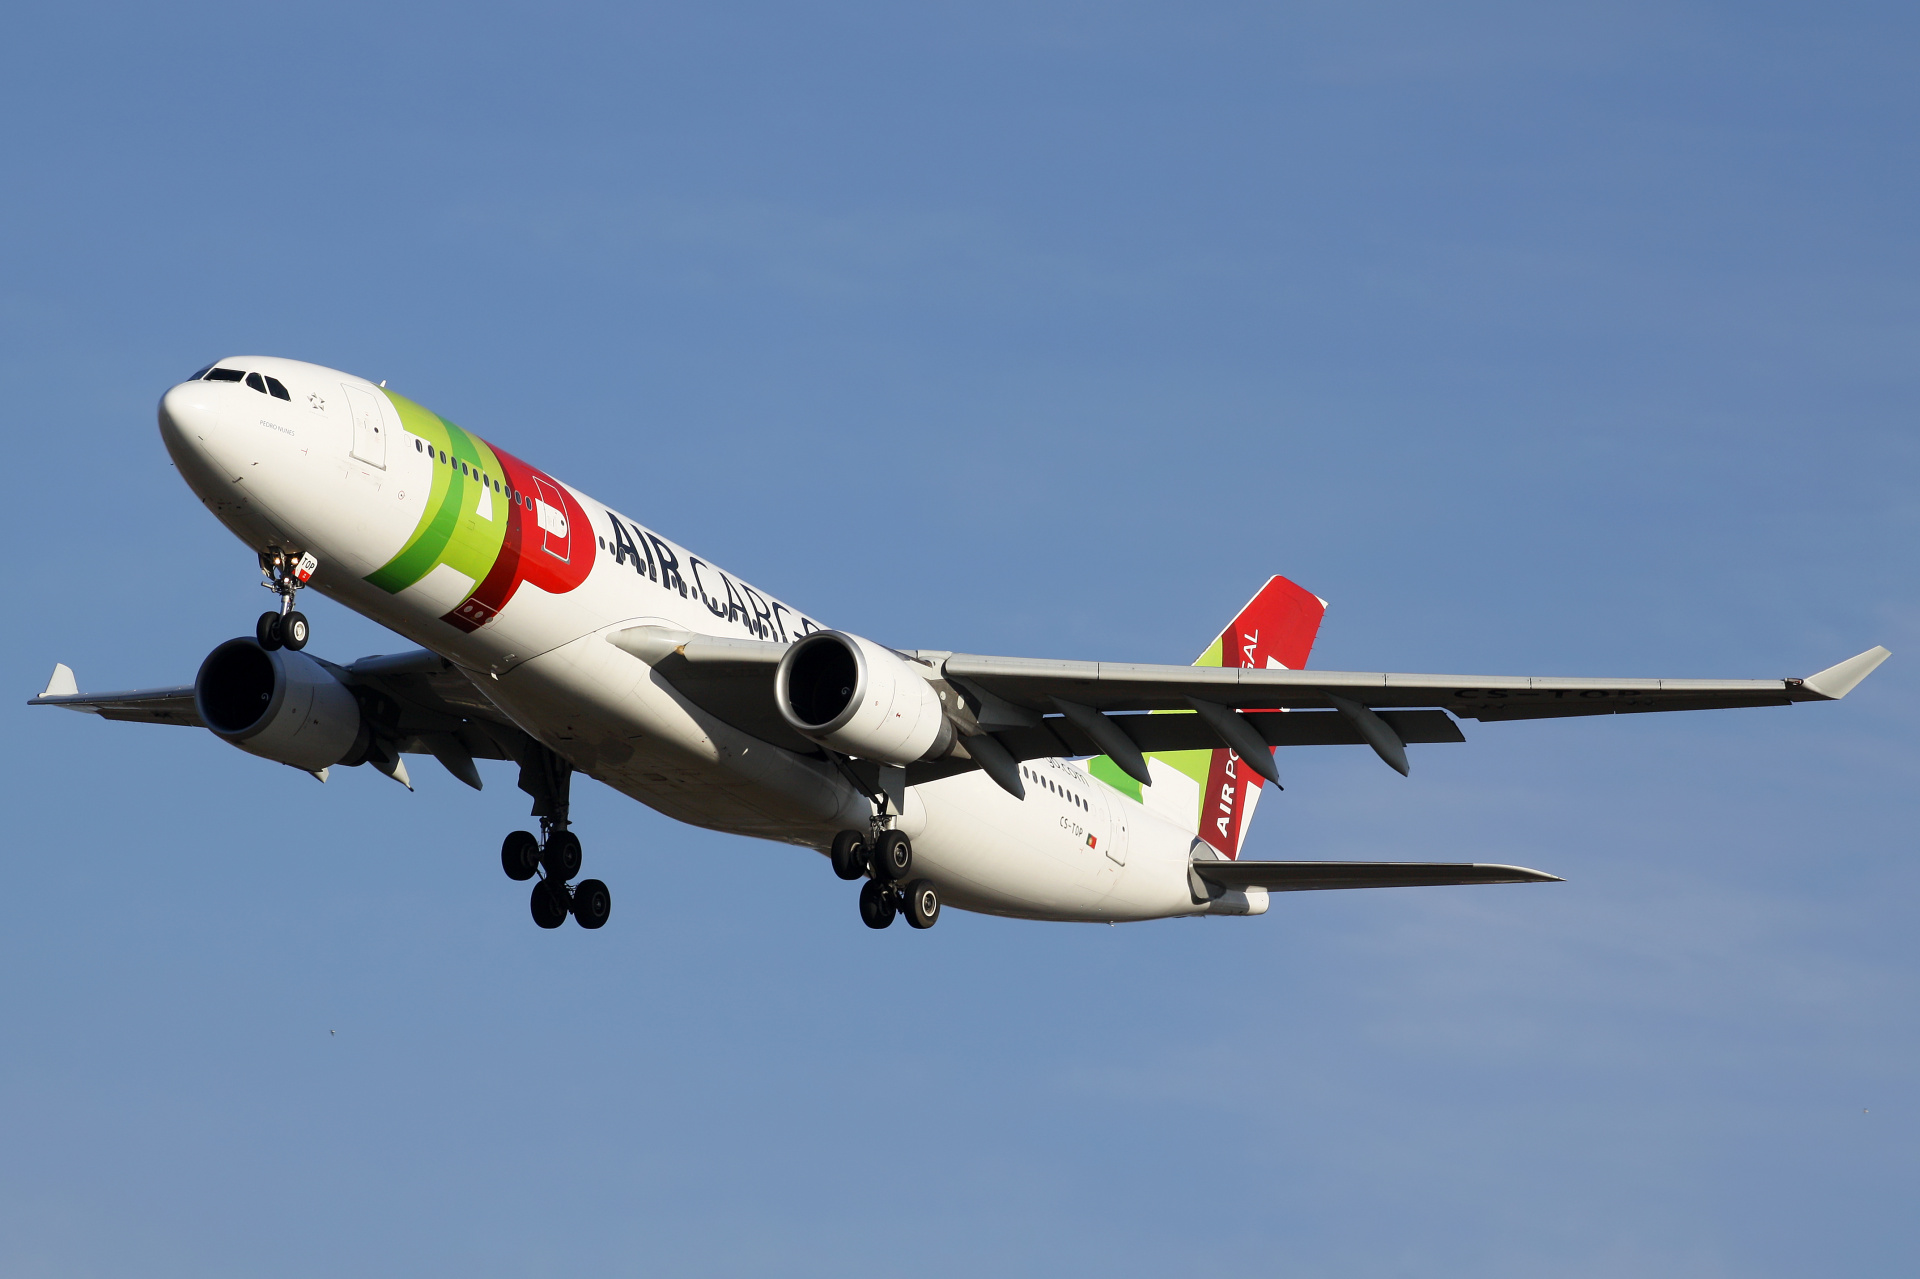 CS-TOP, TAP Air Cargo (Samoloty » Spotting na EPWA » Airbus A330-200 » TAP Air Portugal)